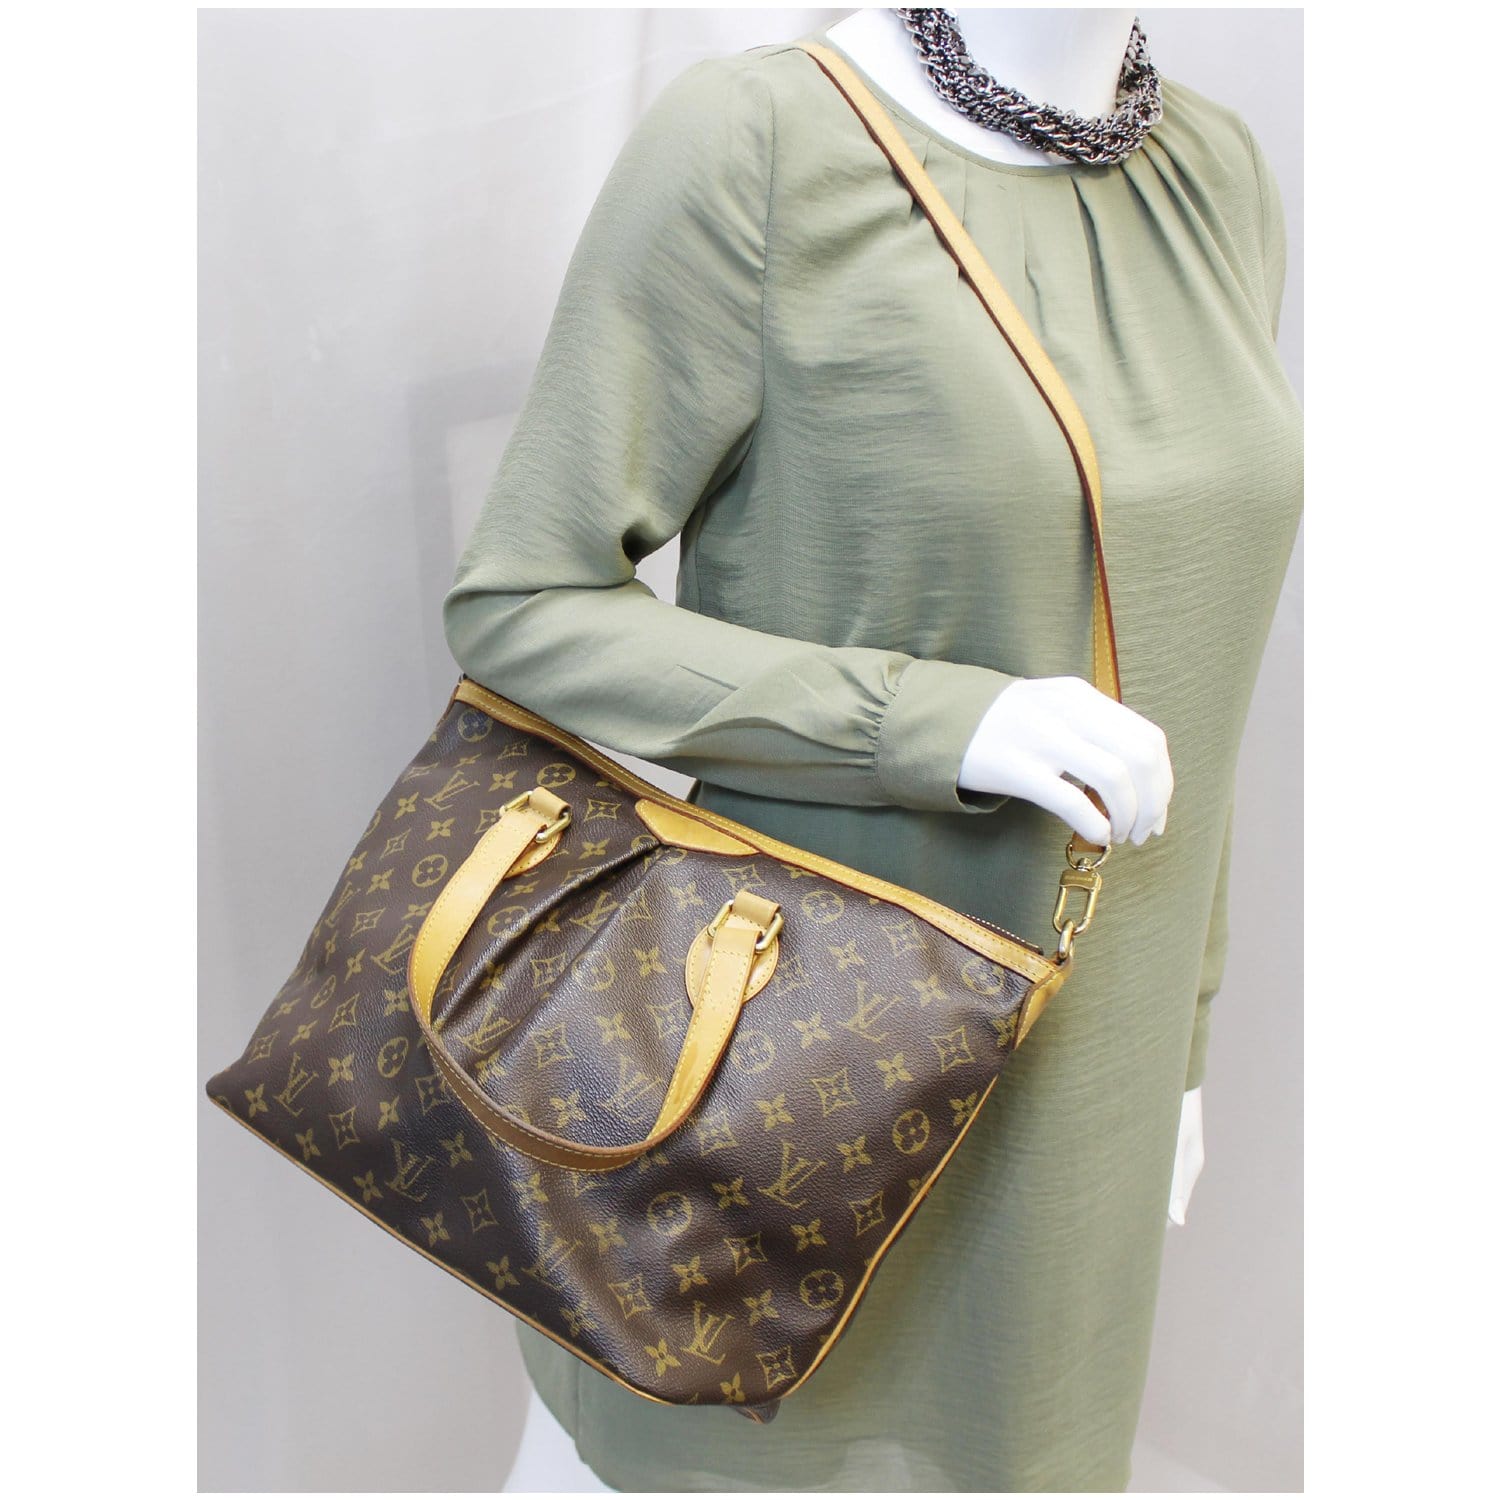 Louis Vuitton Monogram Palermo PM - Brown Totes, Handbags